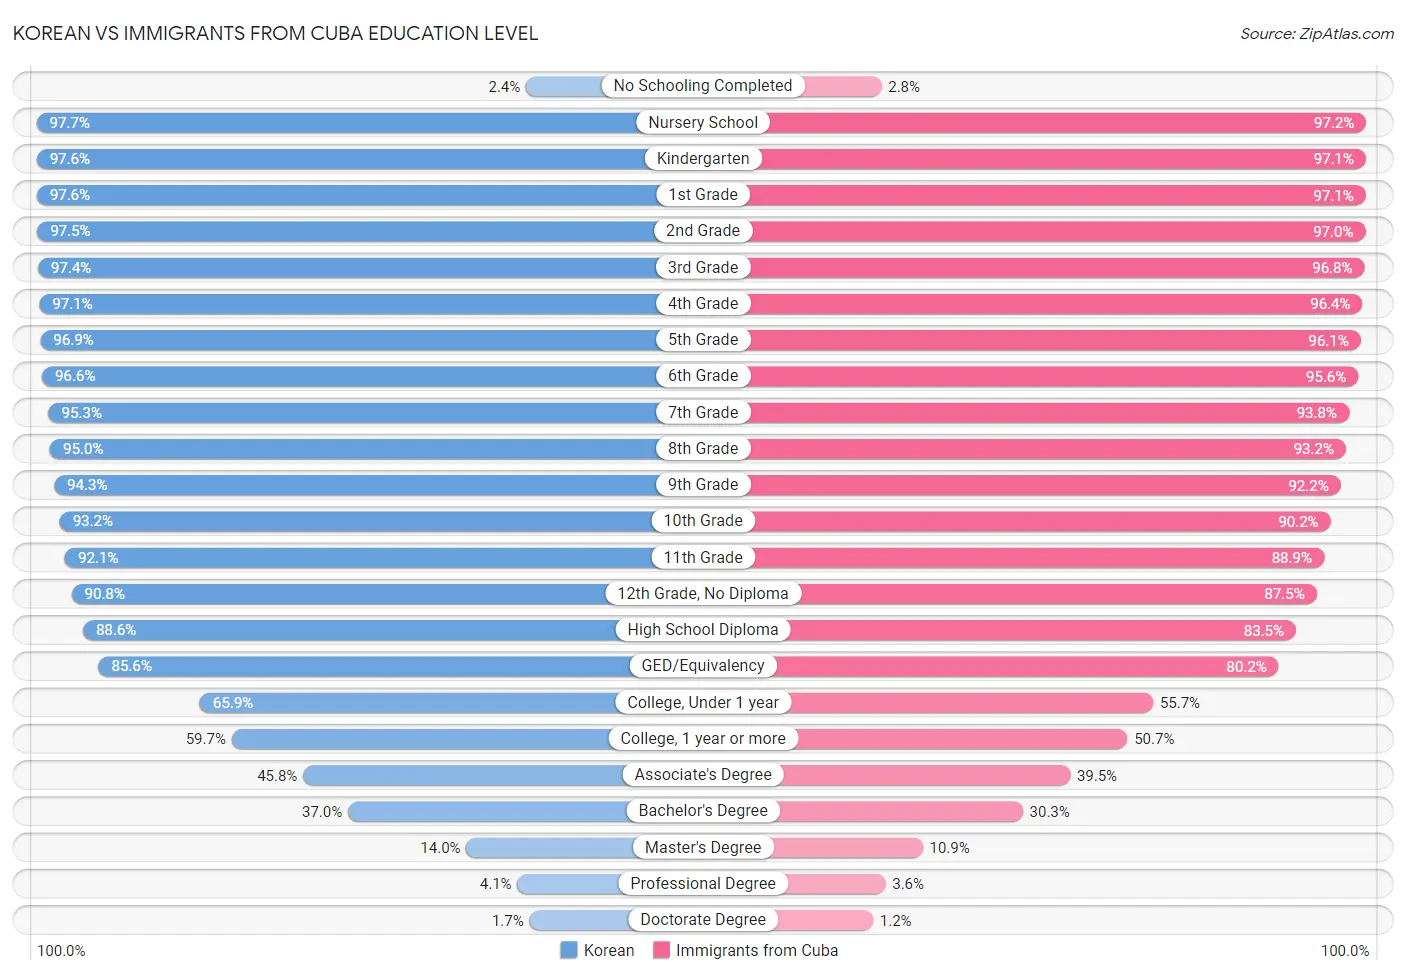 Korean vs Immigrants from Cuba Education Level